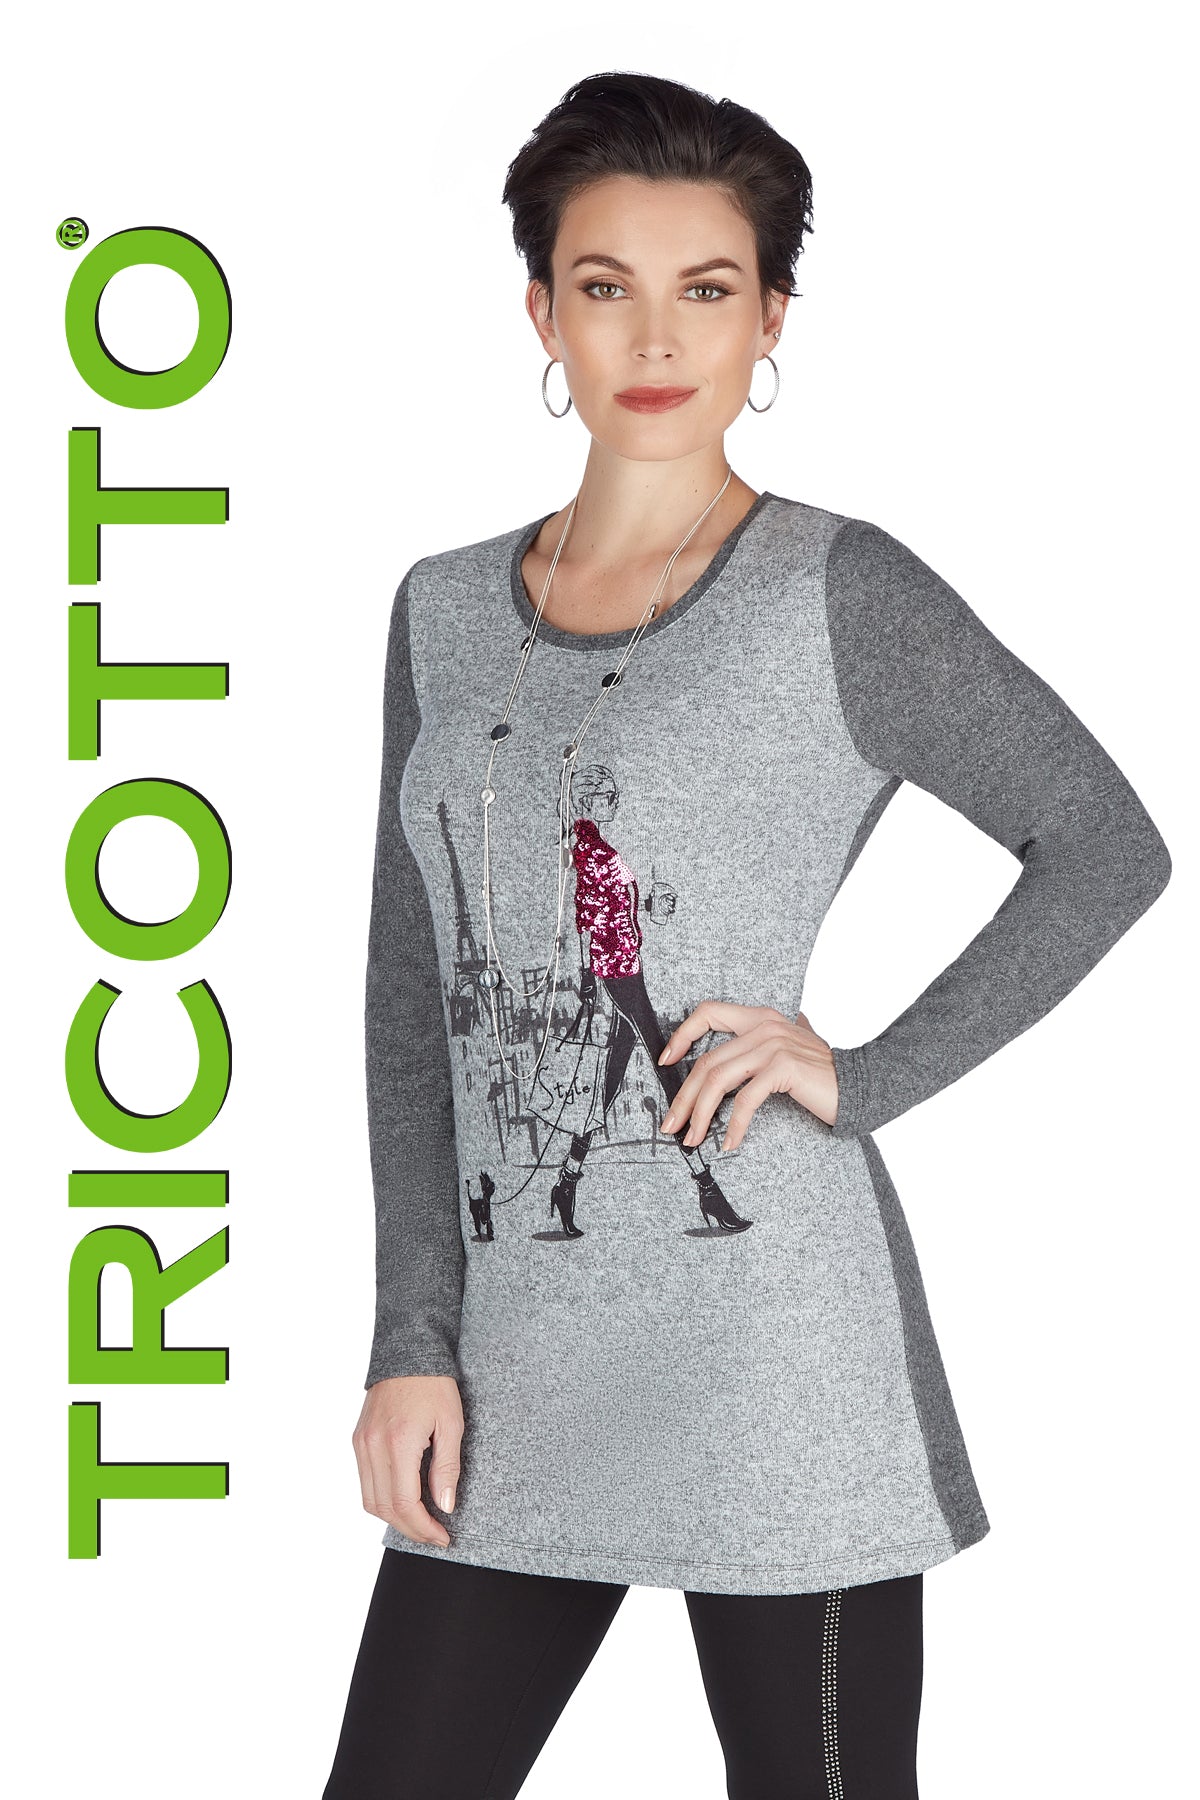 Tricotto Sweaters Online-Tricotto Fashion Montreal-Tricotto Online Shop-Tricotto Fashion Quebec-Buy Tricotto Sweaters Online